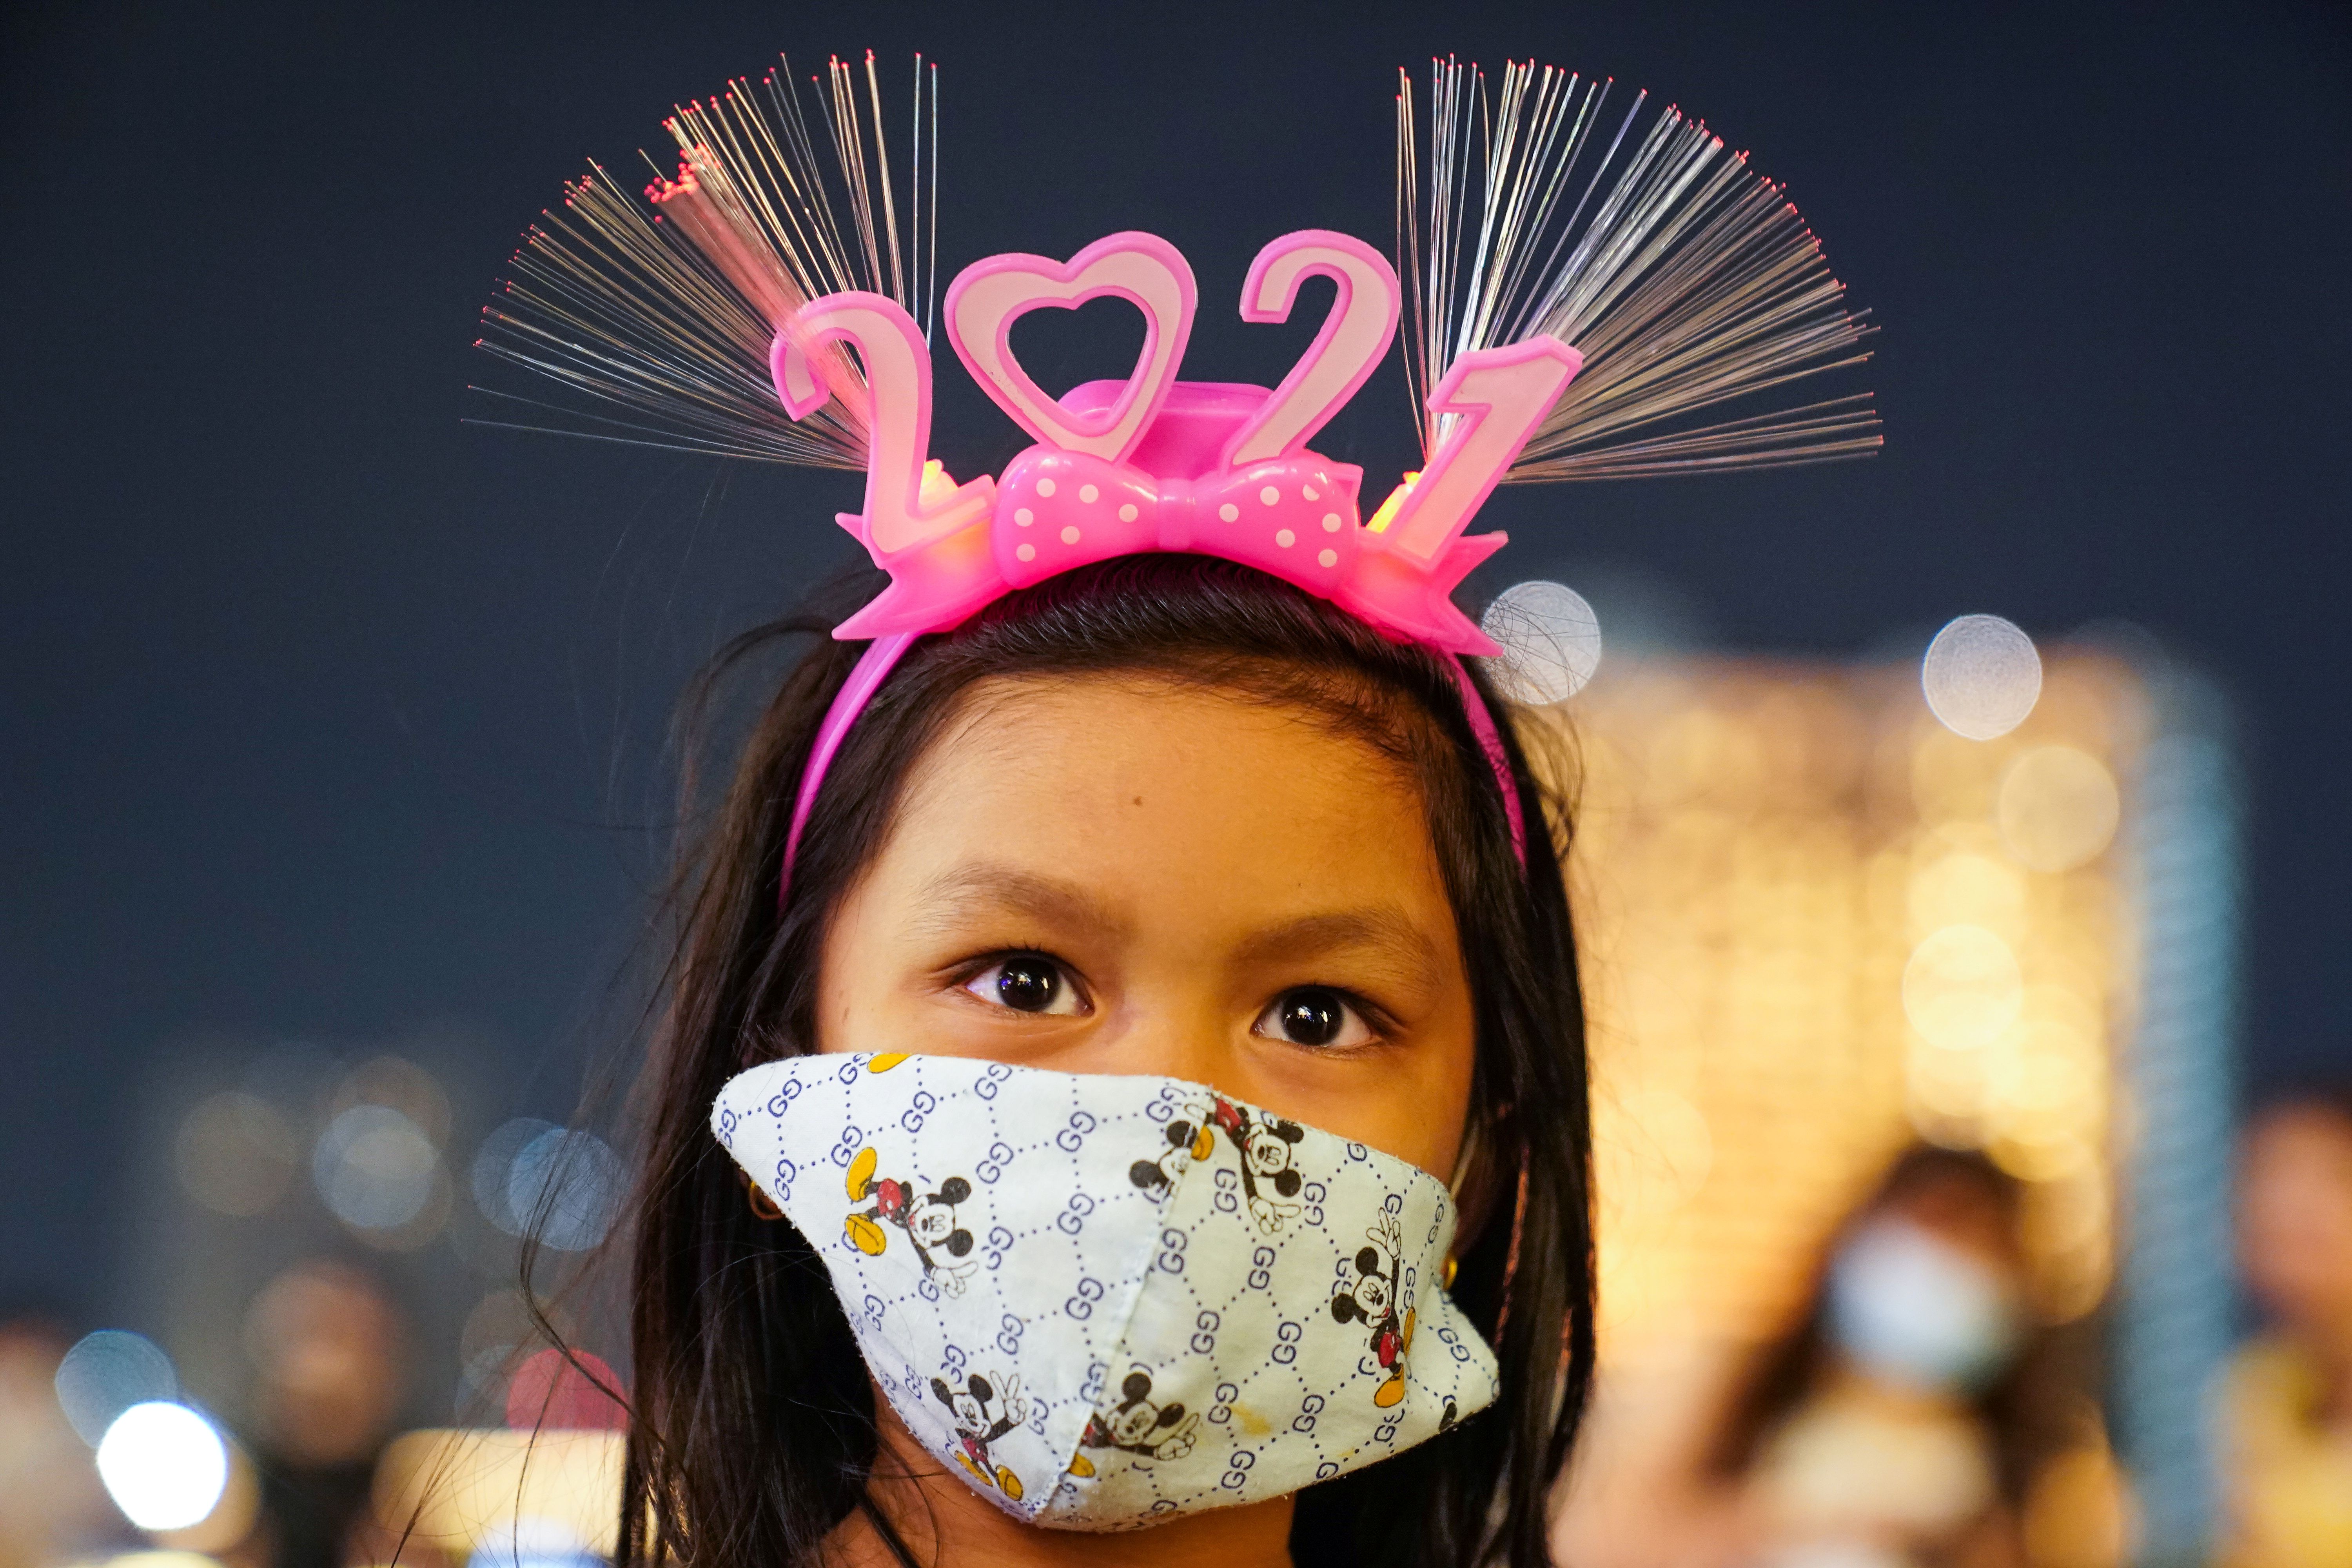 Una niña con mascarilla espera la llegada del 2021 en Bangkok, Tailandia. REUTERS/Athit Perawongmetha